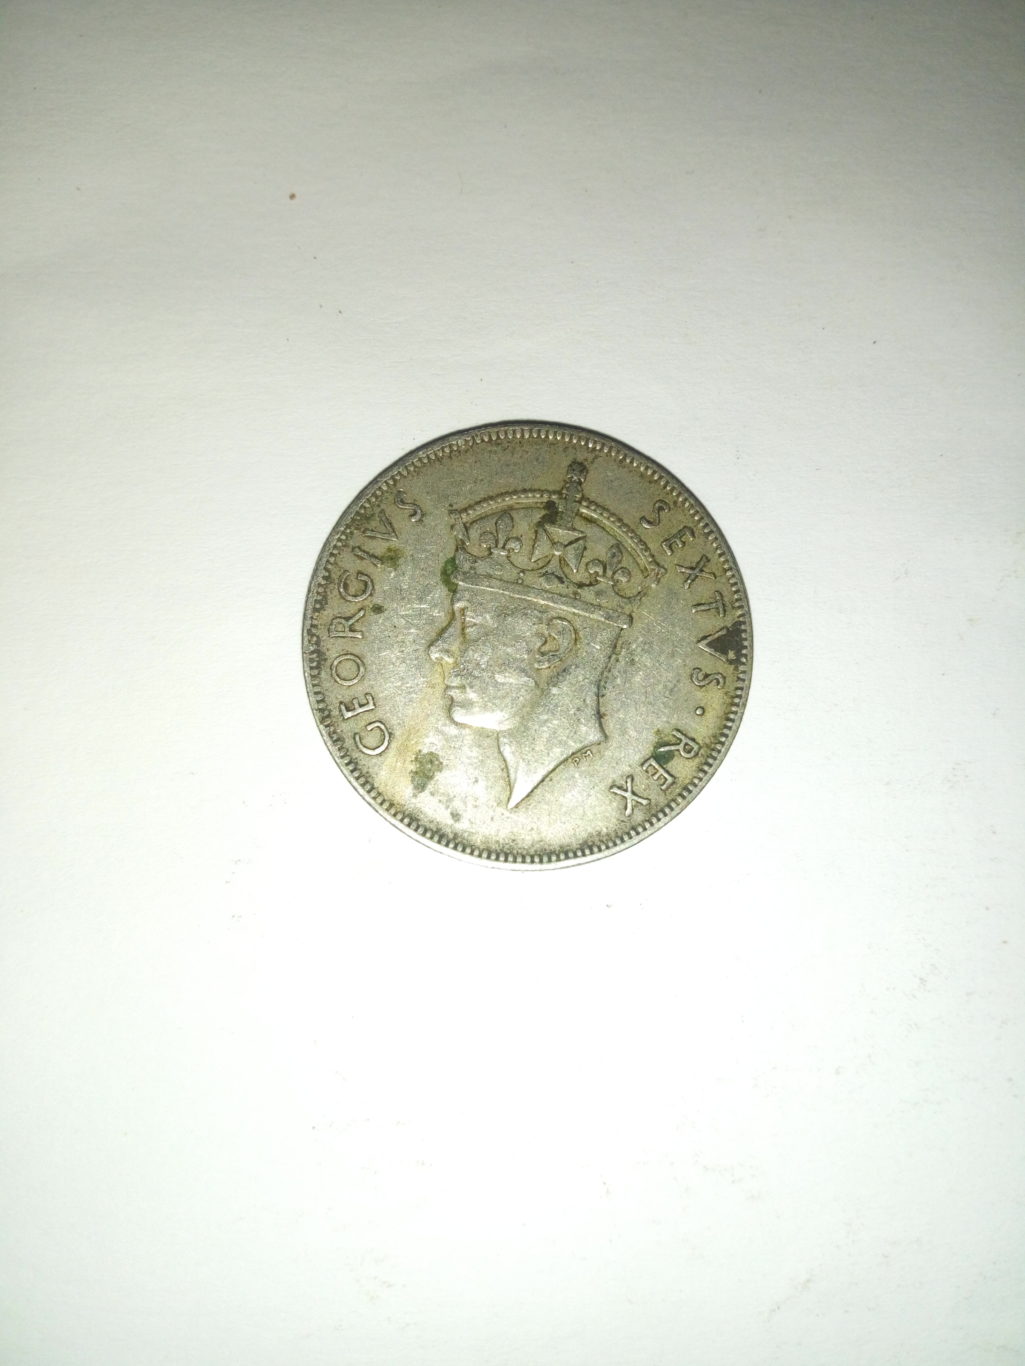 1949_georgivs east Africa 1 shilling